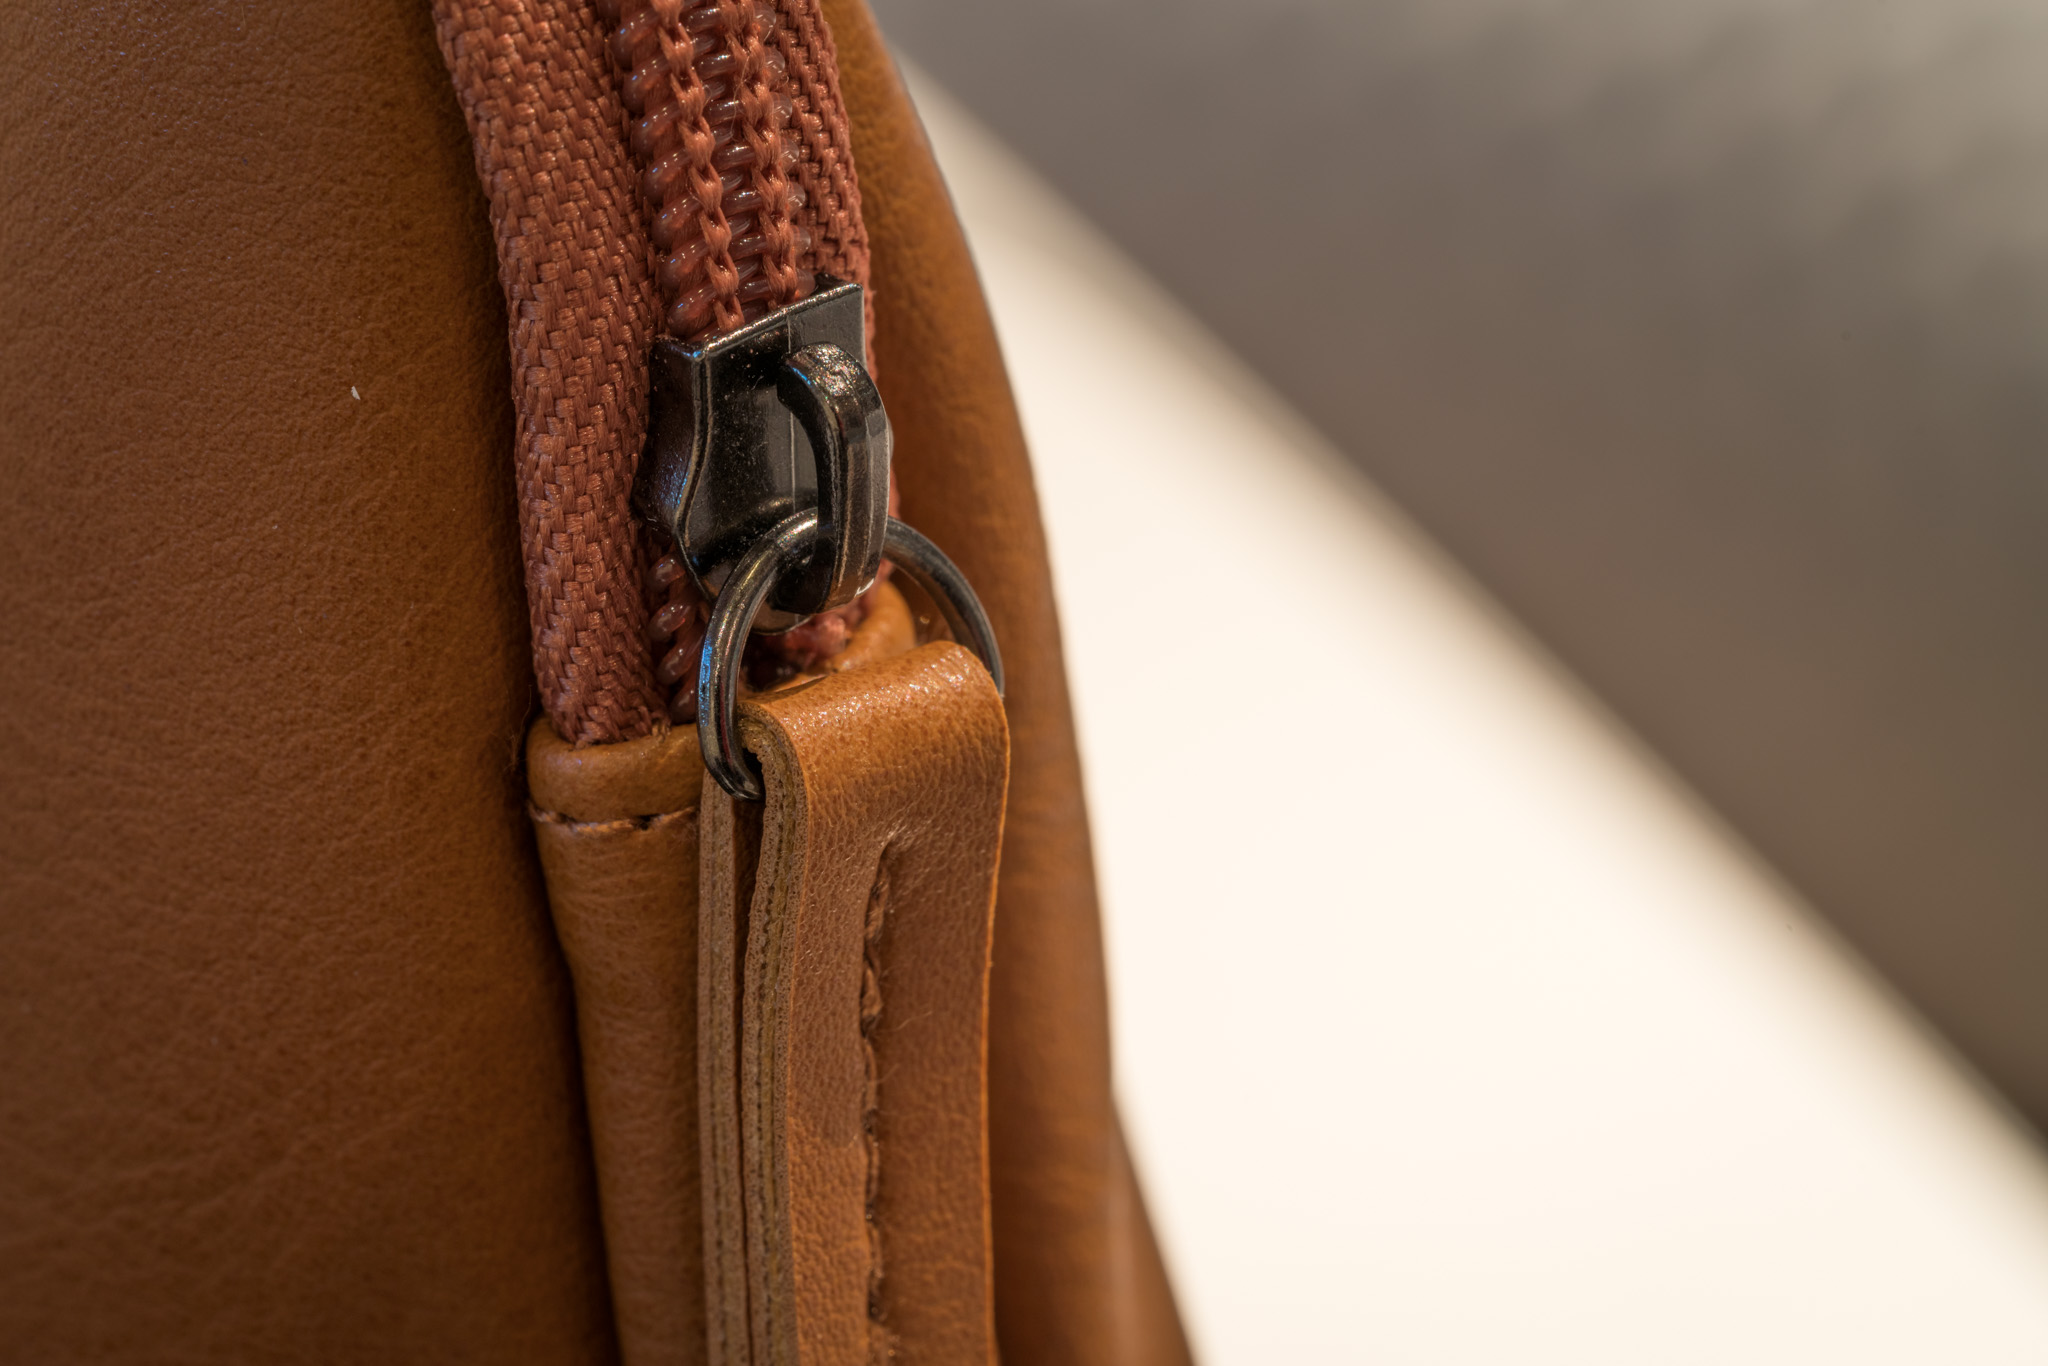 a zipper on a bag